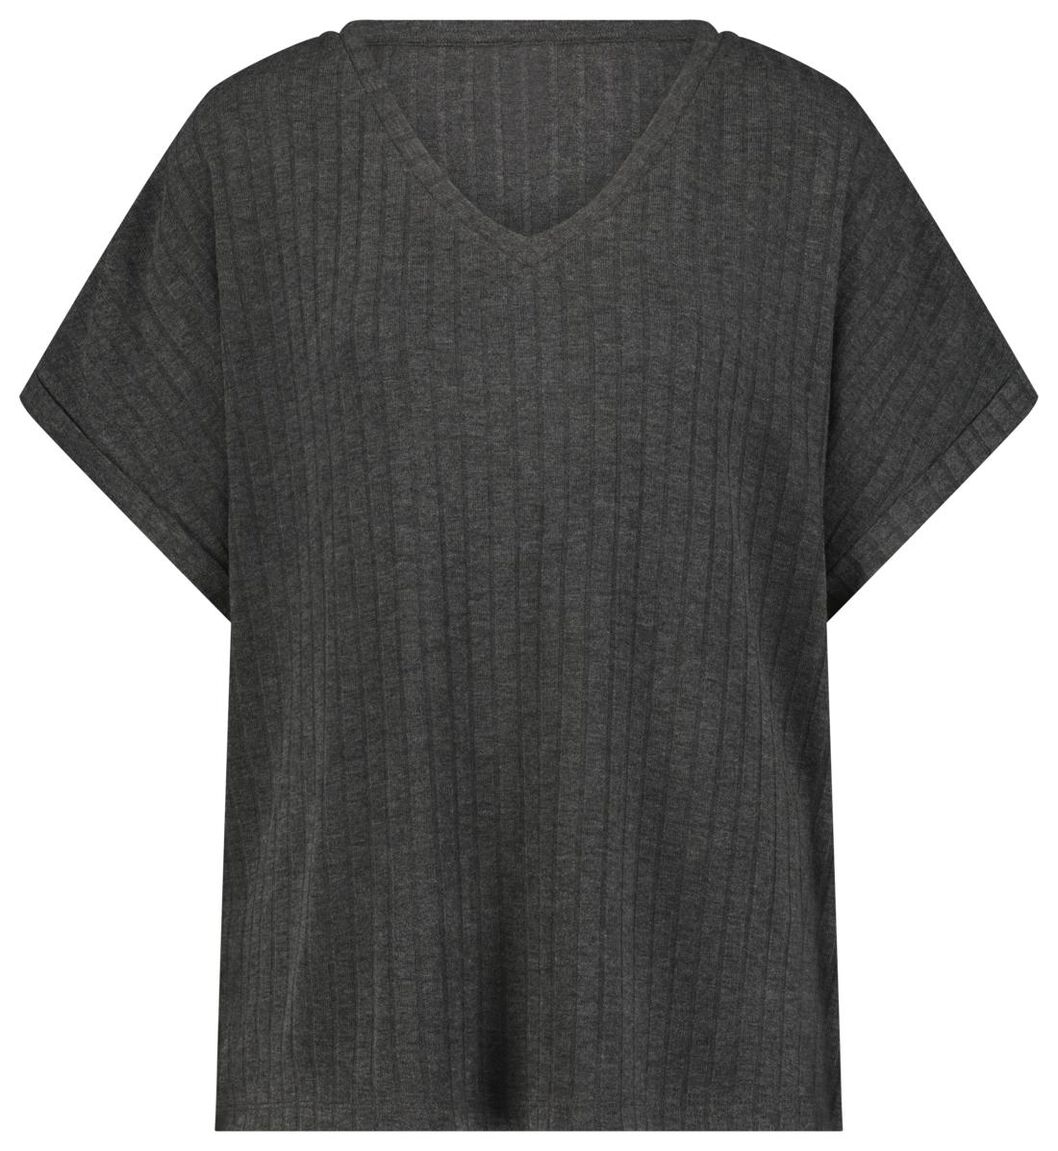 Damen-Lounge-Shirt schwarz XL - 23410090 - HEMA